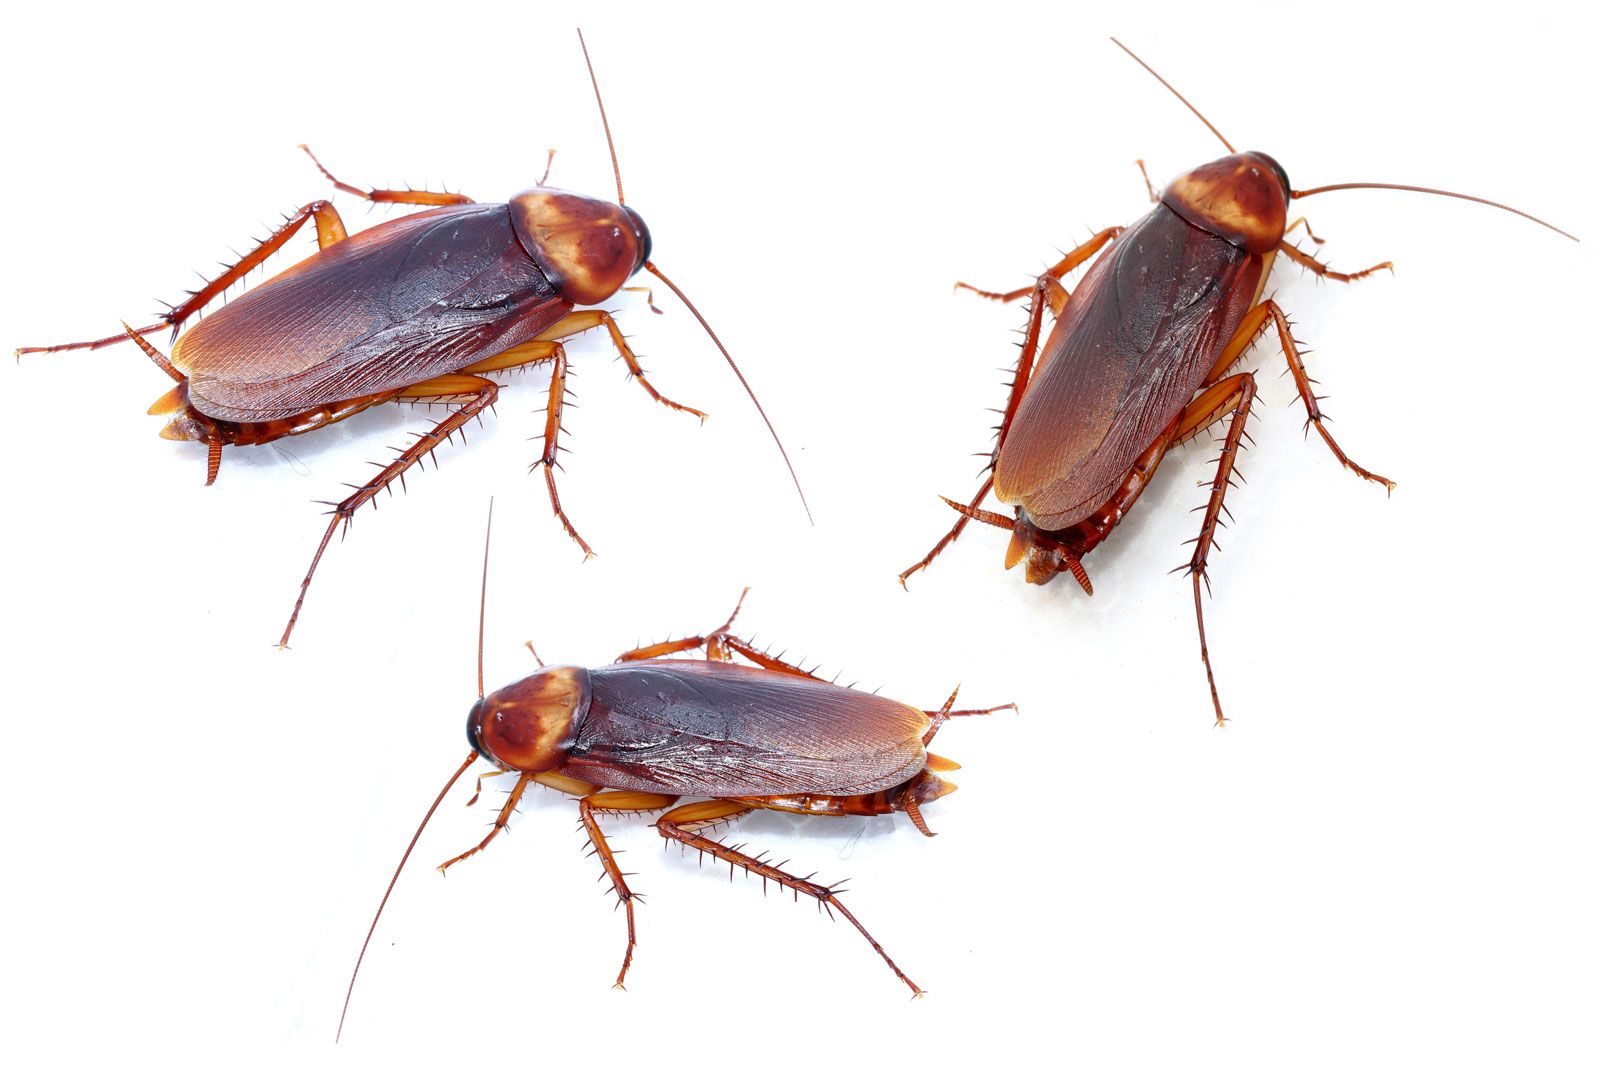 Cockroach problem